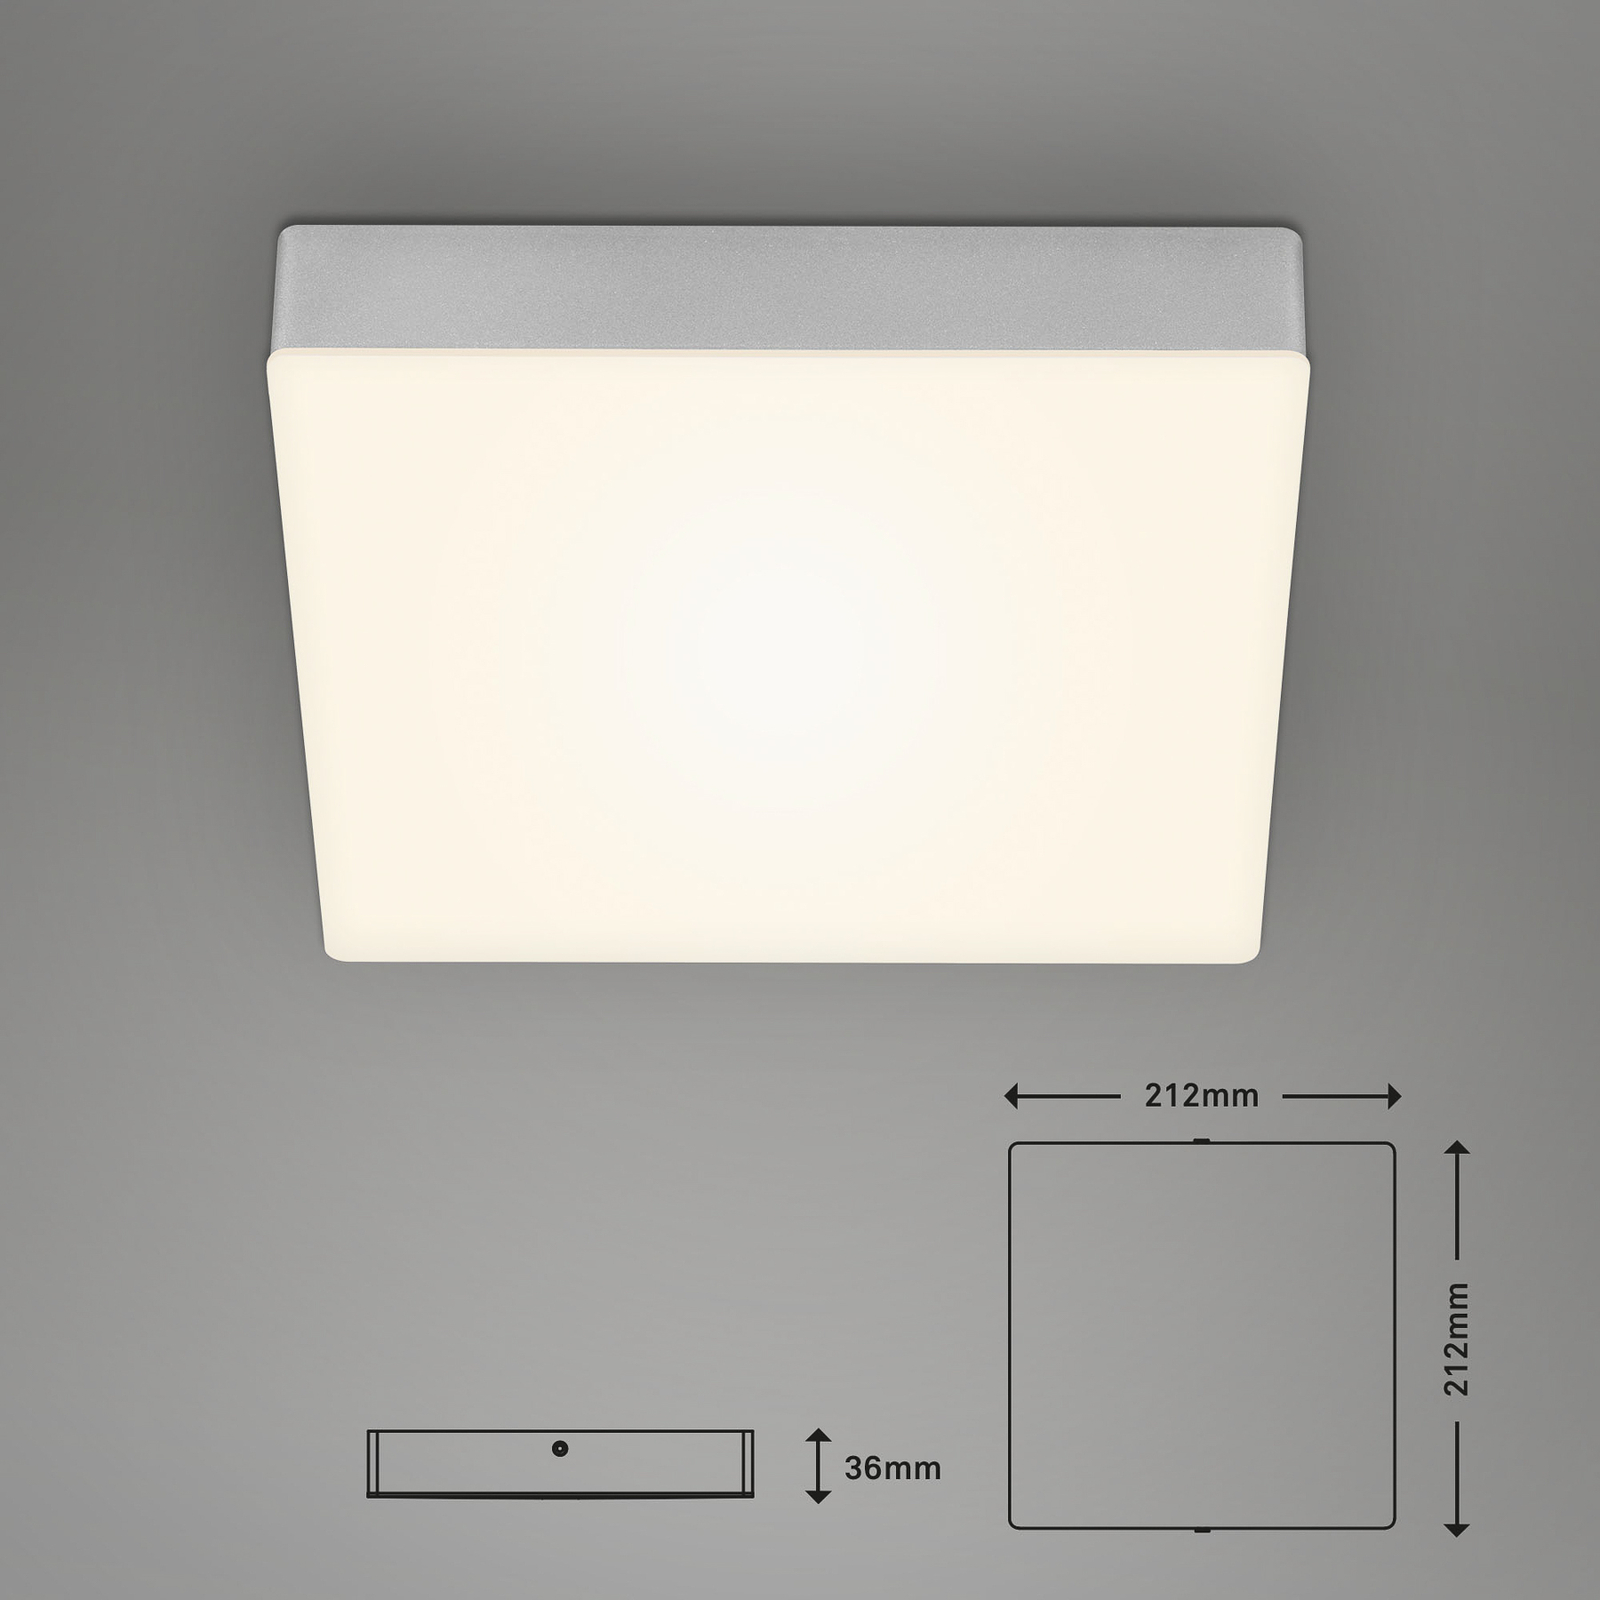 LED-Deckenleuchte Flame, 21,2 x 21,2 cm, silber